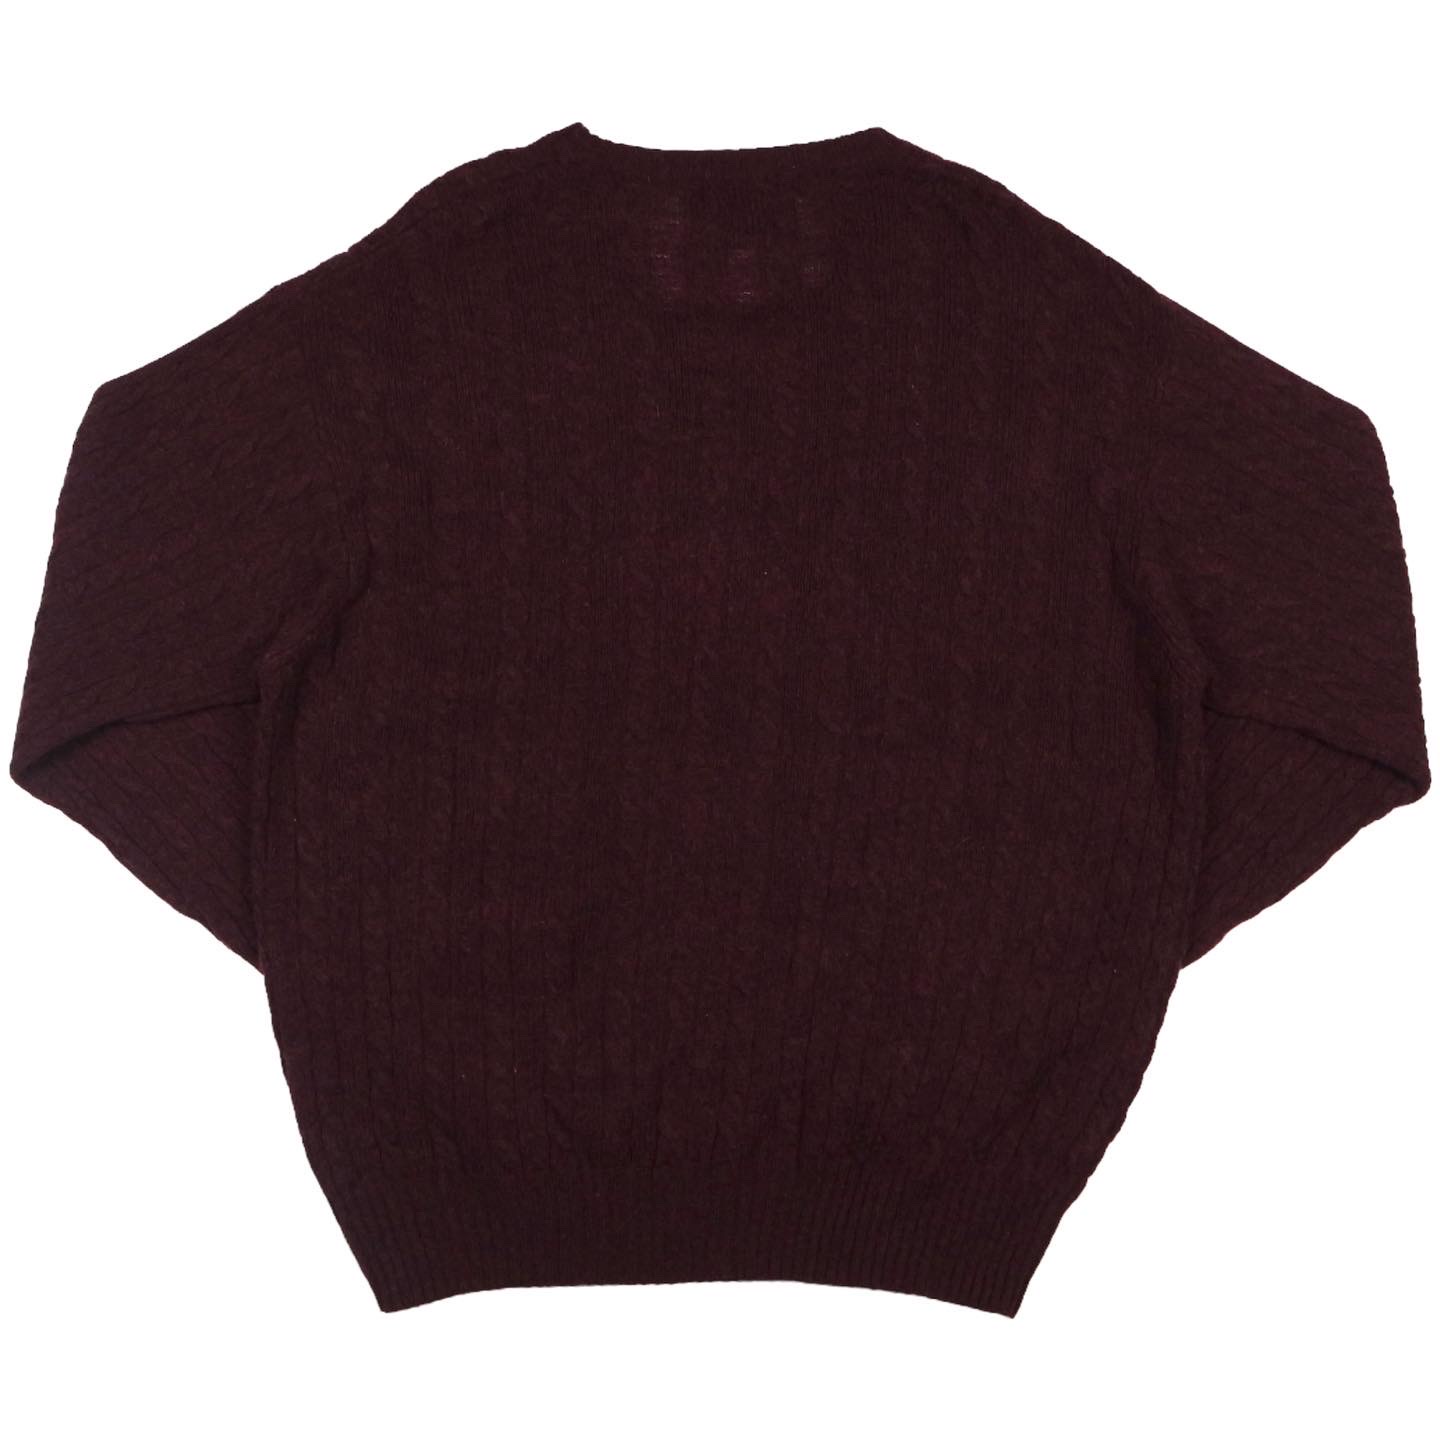 Pendleton Wool Sweater Size XL